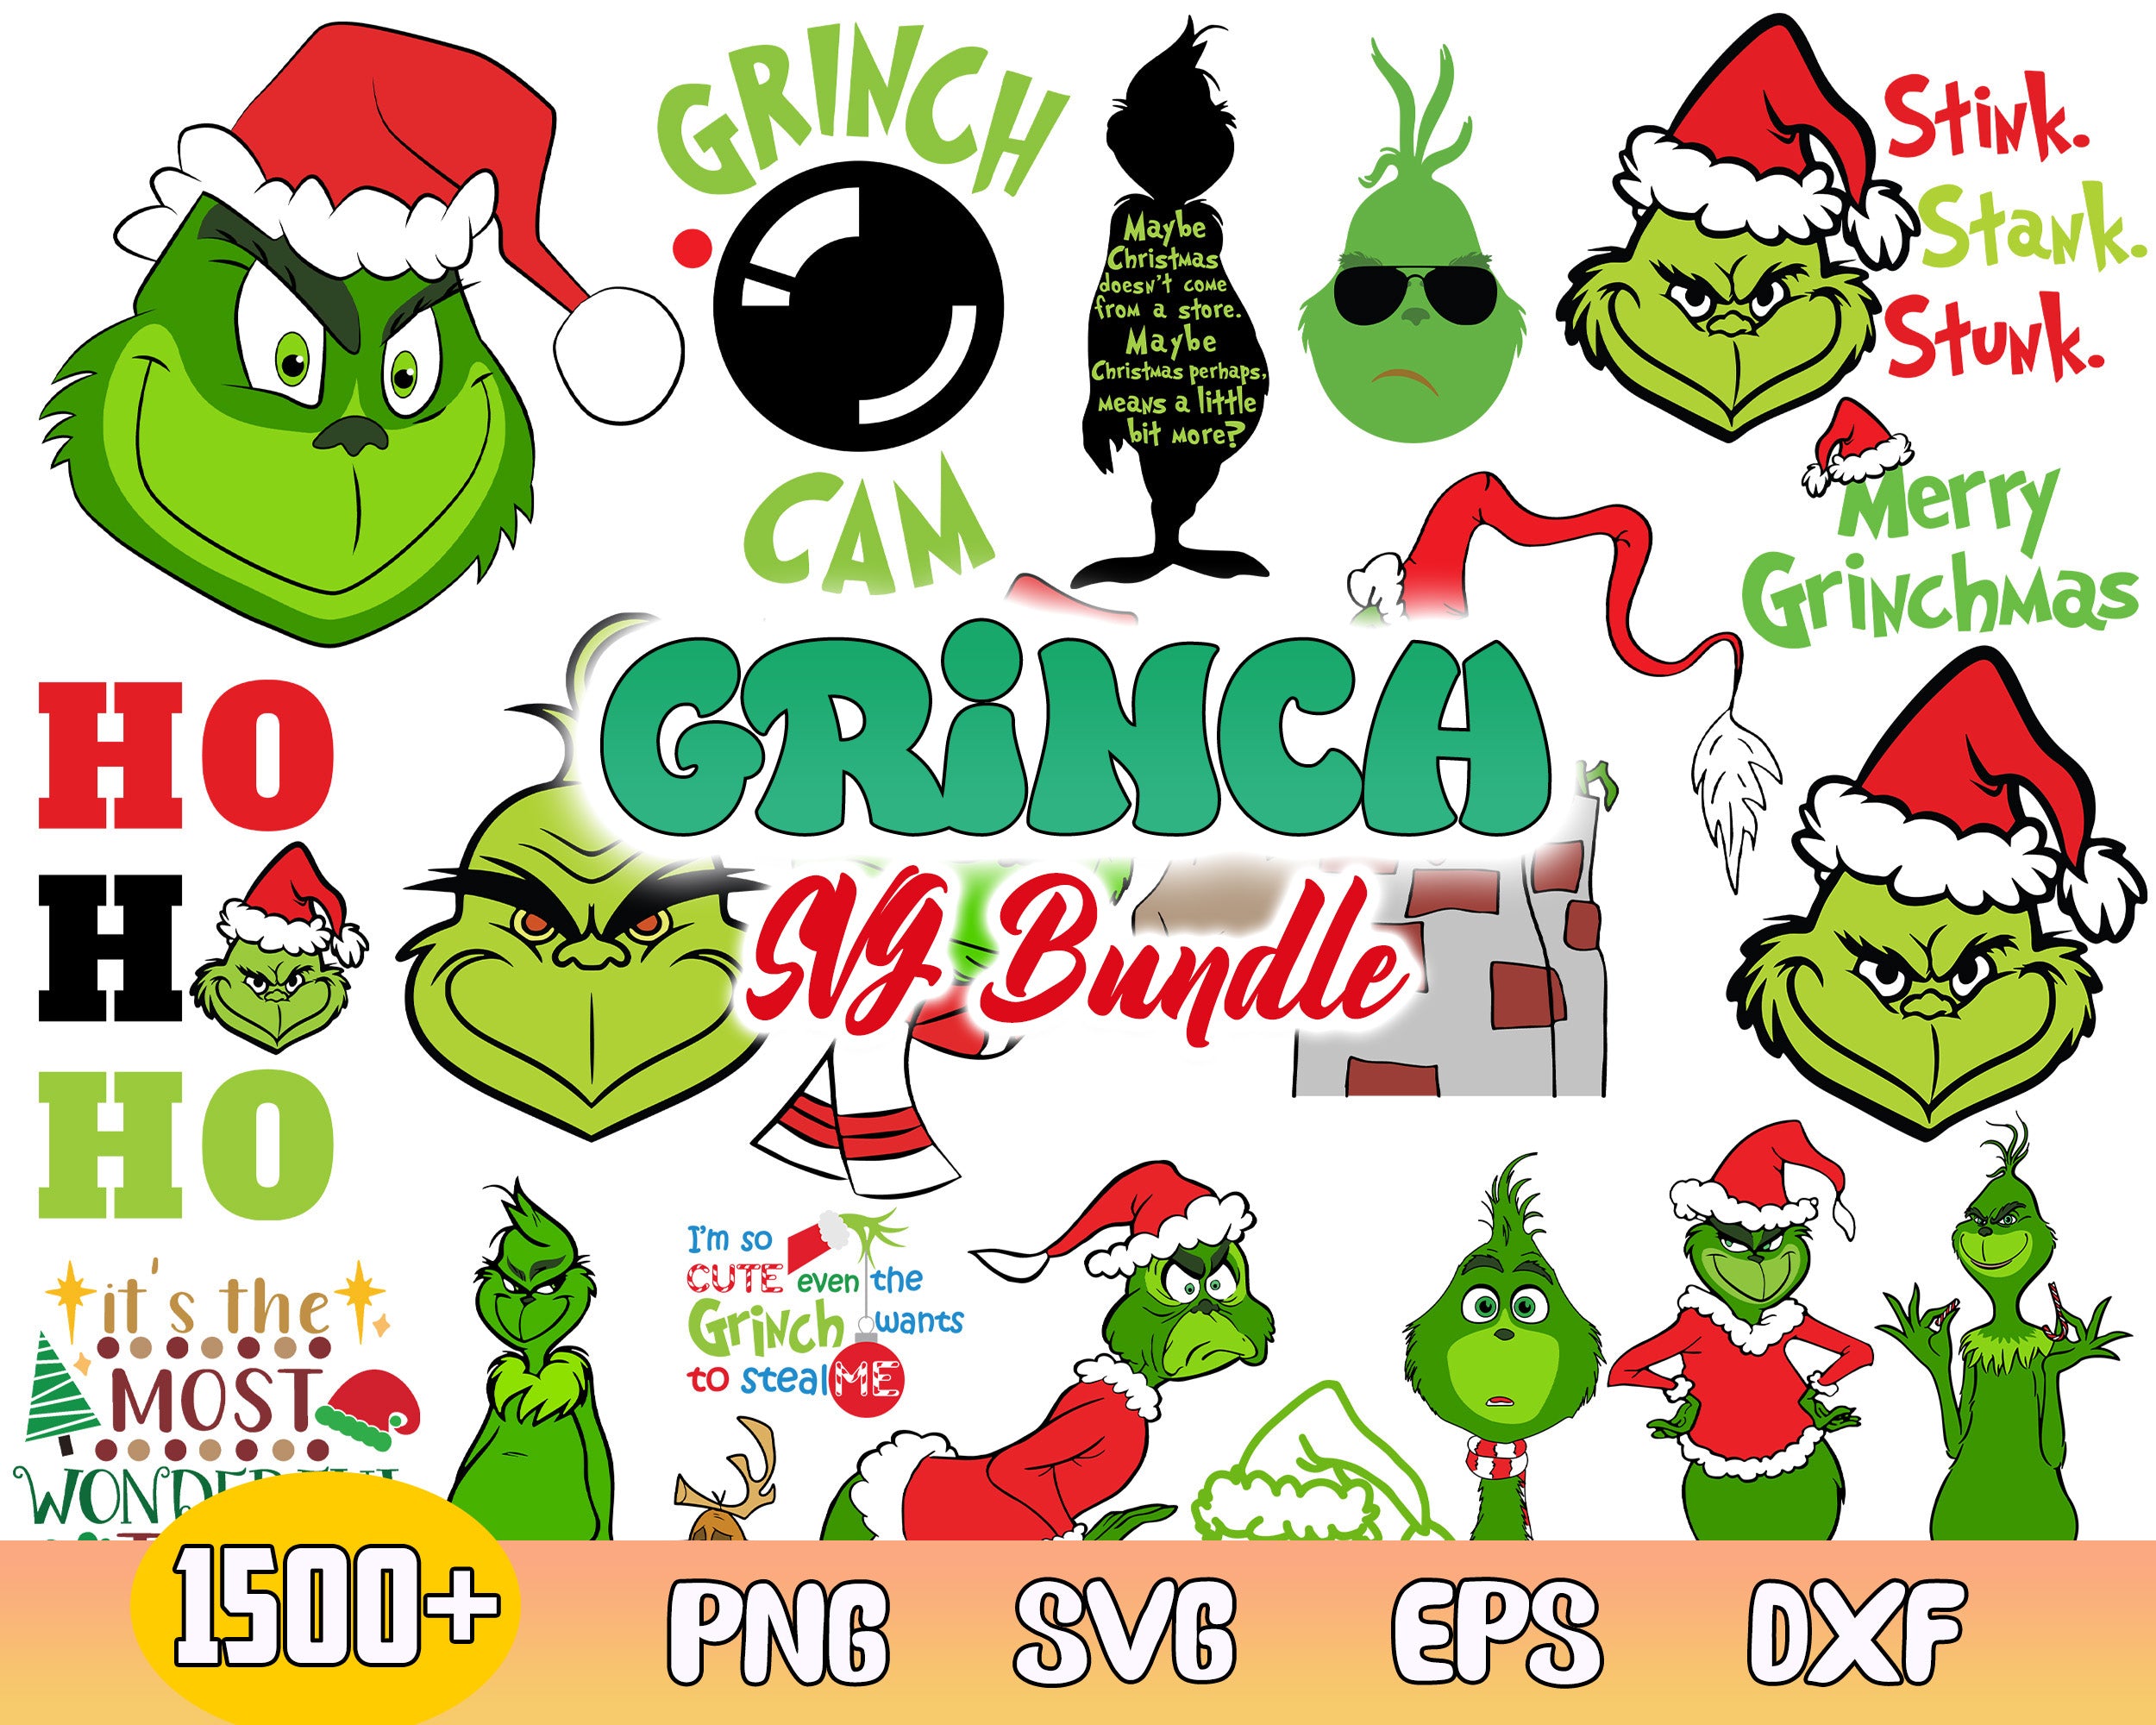 Version 3.0 - Ultimate Grinch Bundle SVG, Combo Grinch SVG, Grinch Cutting Image, Christmas Grinch svg png eps dxf jpg